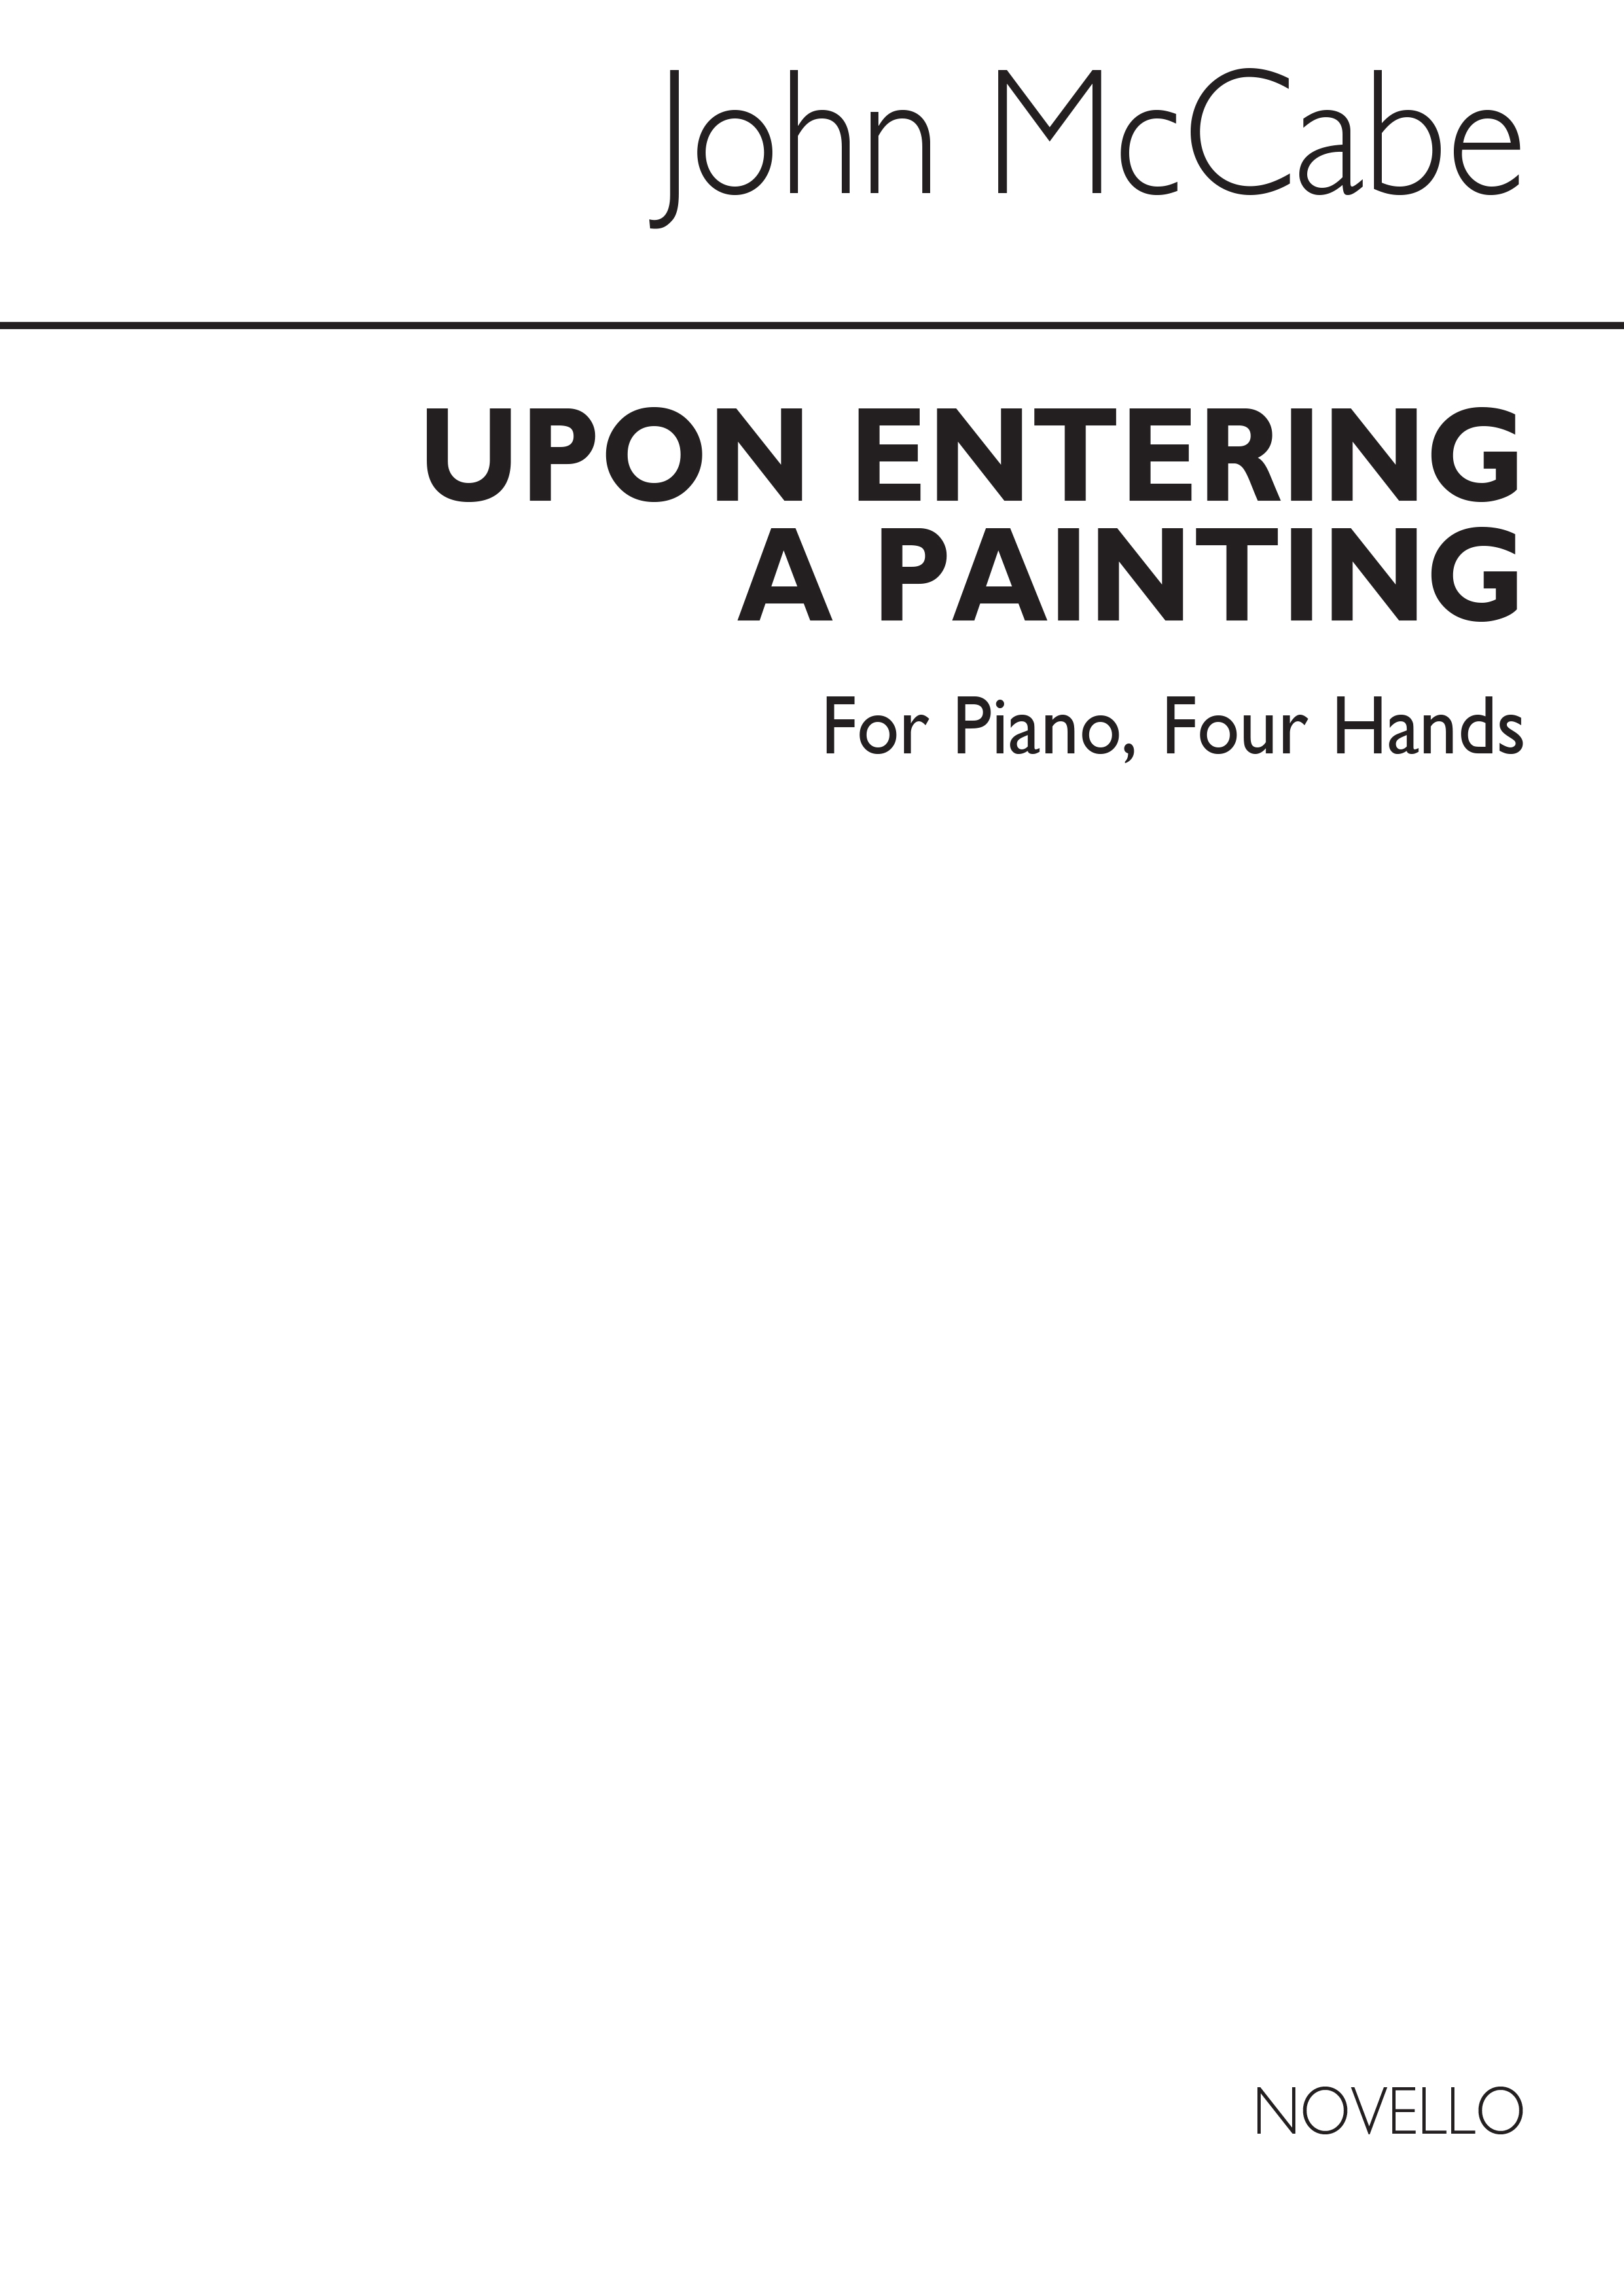 John McCabe: Upon Entering A Painting